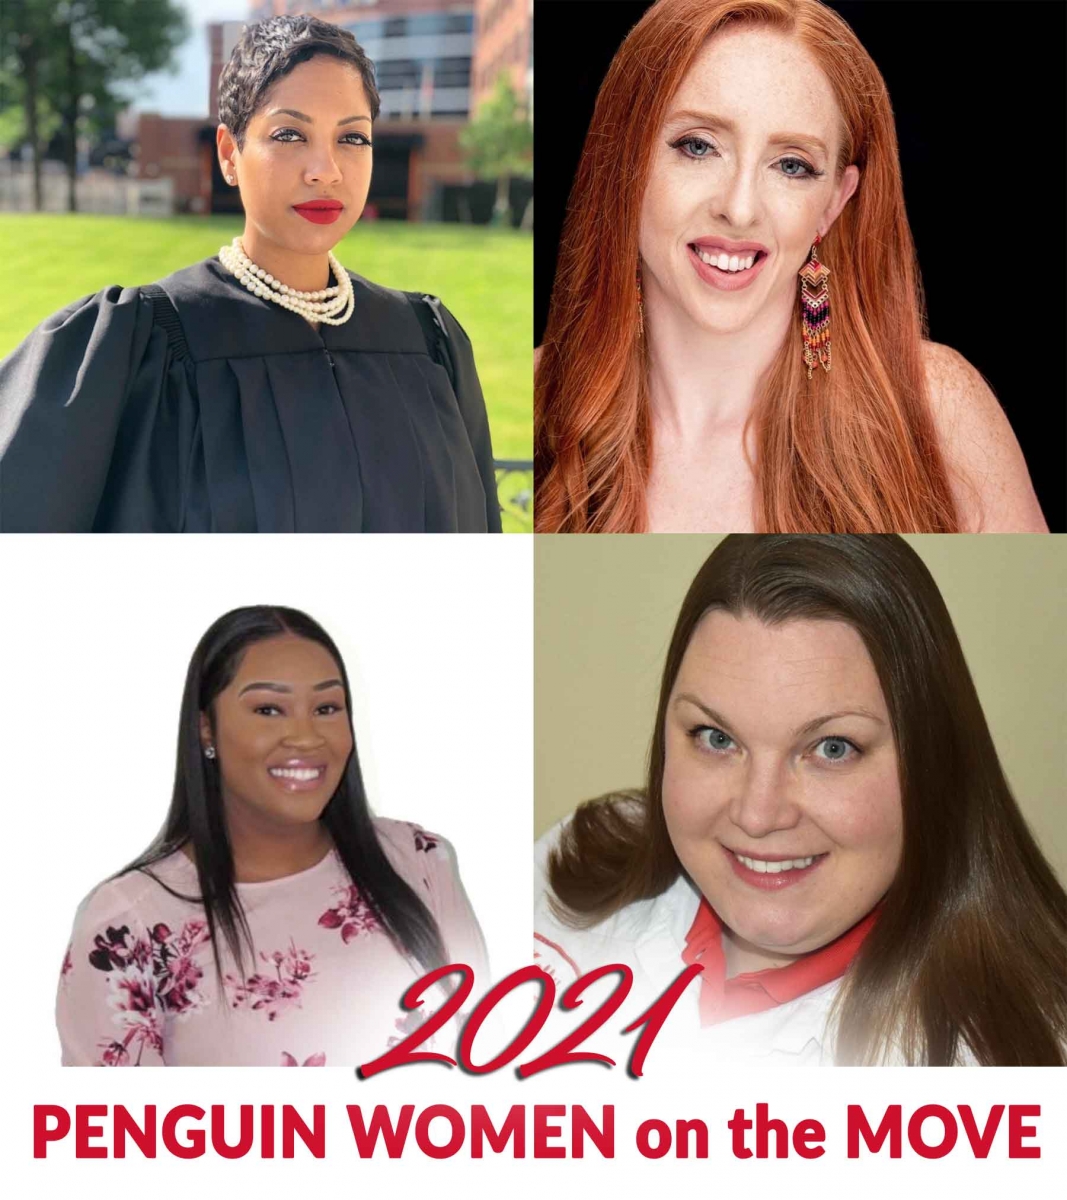 Penguin Women on the move